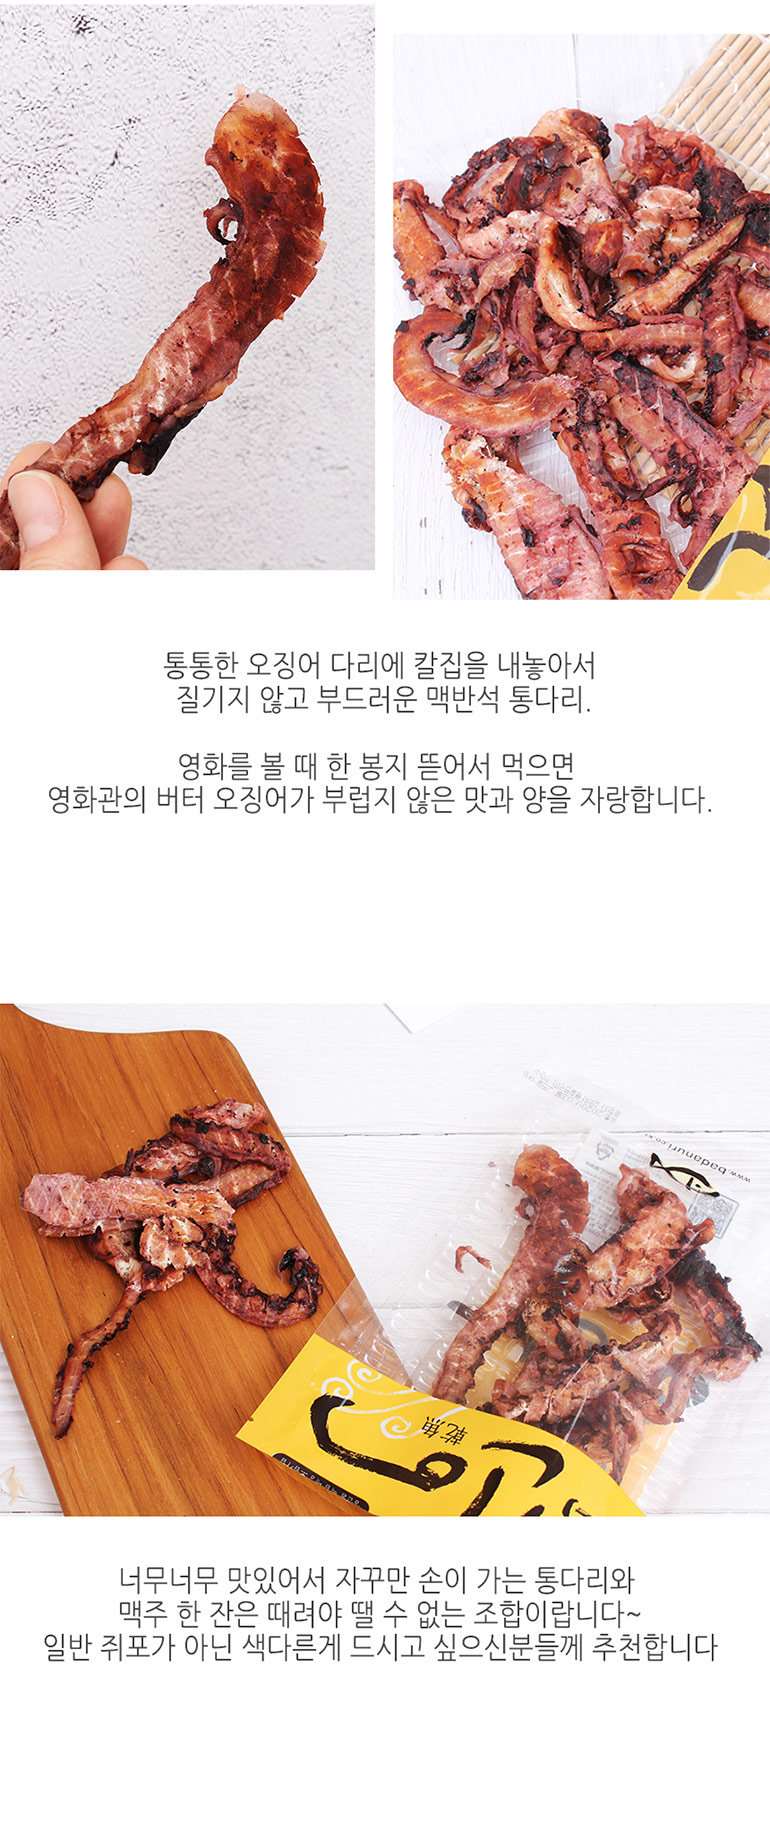 韓國食品-[Badanurie] Roasted Squid Tentacle 100g